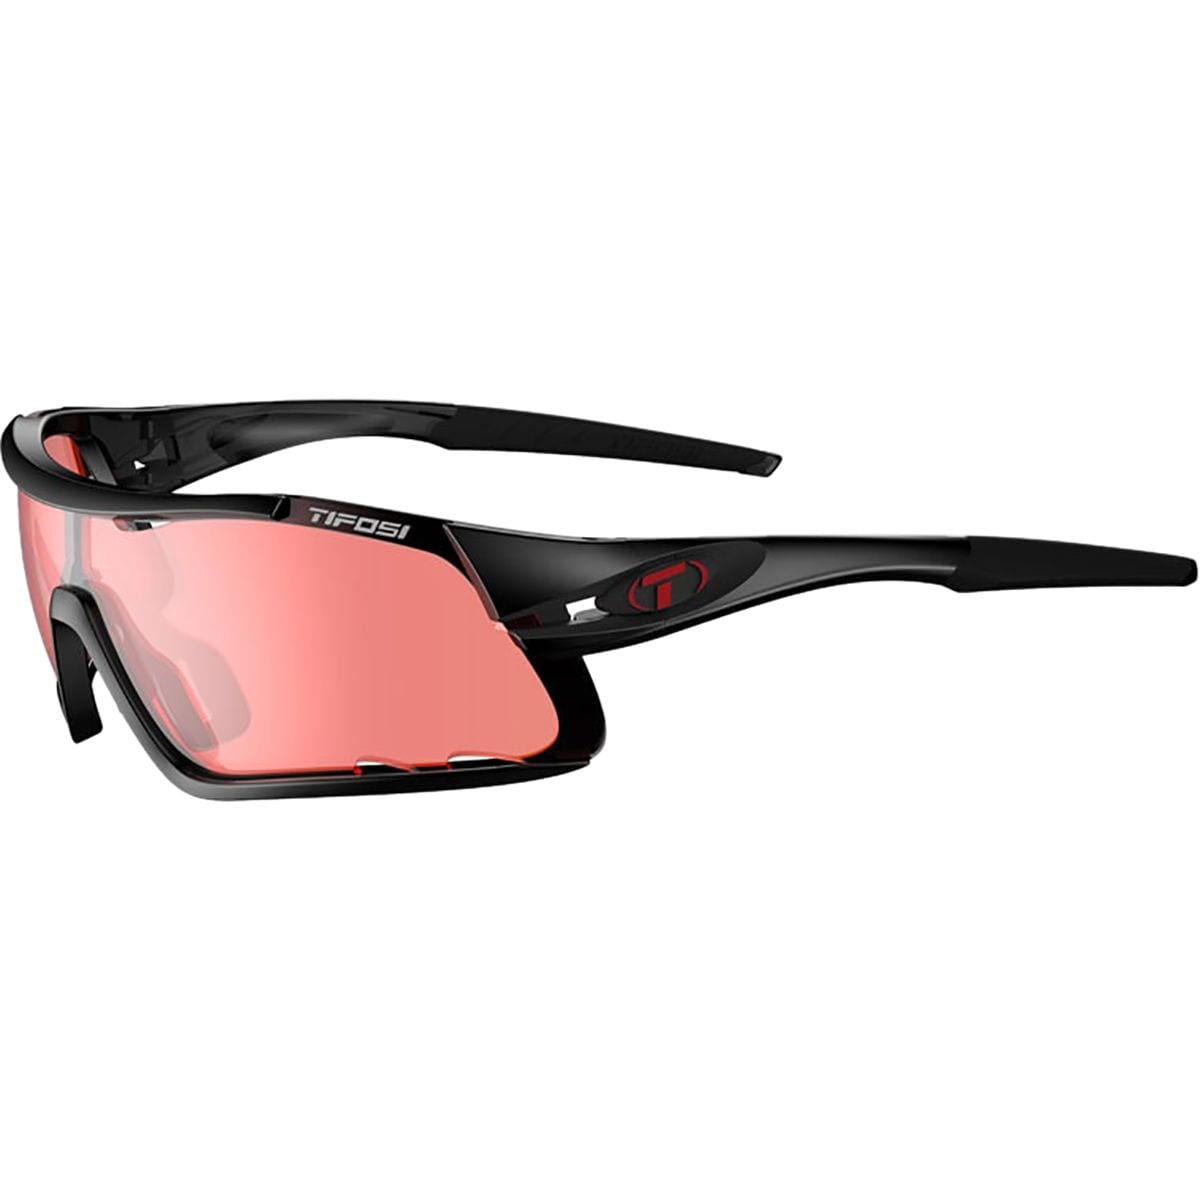 premium polarized uv400 6 in 1 magnetic shades changeable sunglasses wayfarer style